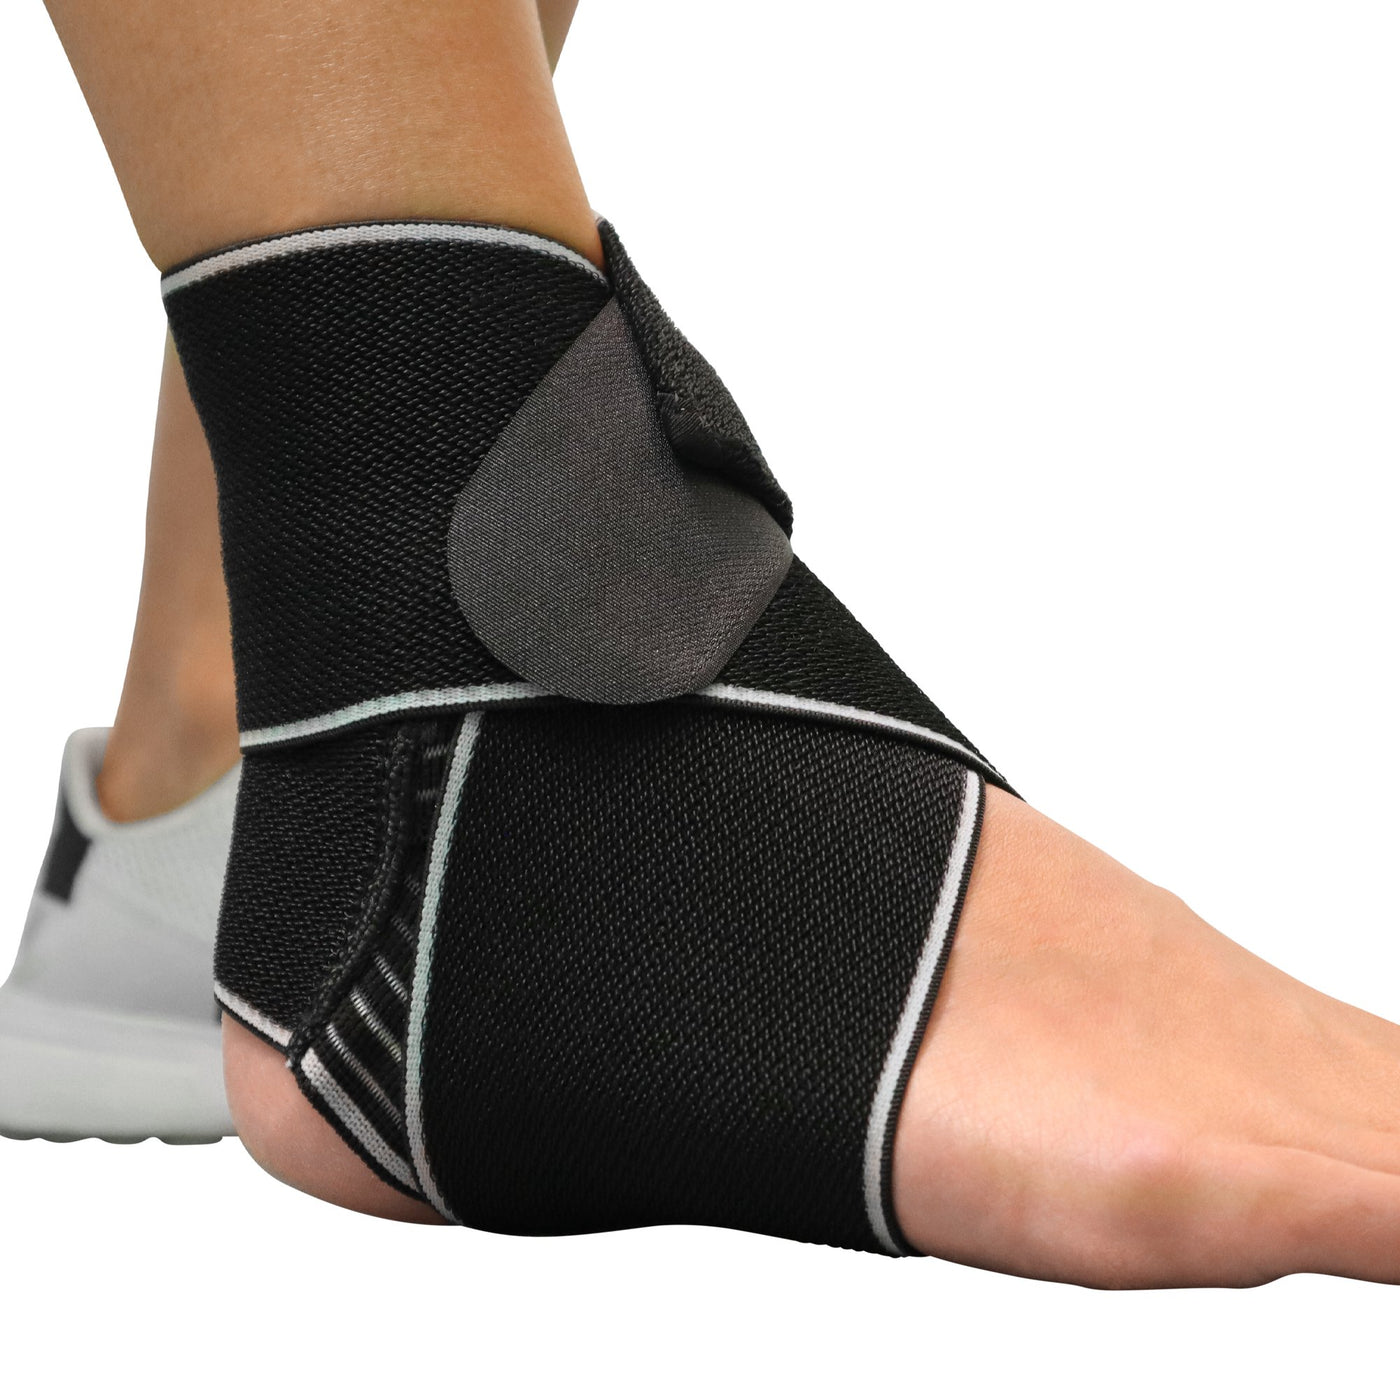 Ankle Brace Wrap - Unisex - Compression Ankle Support - Adjustable